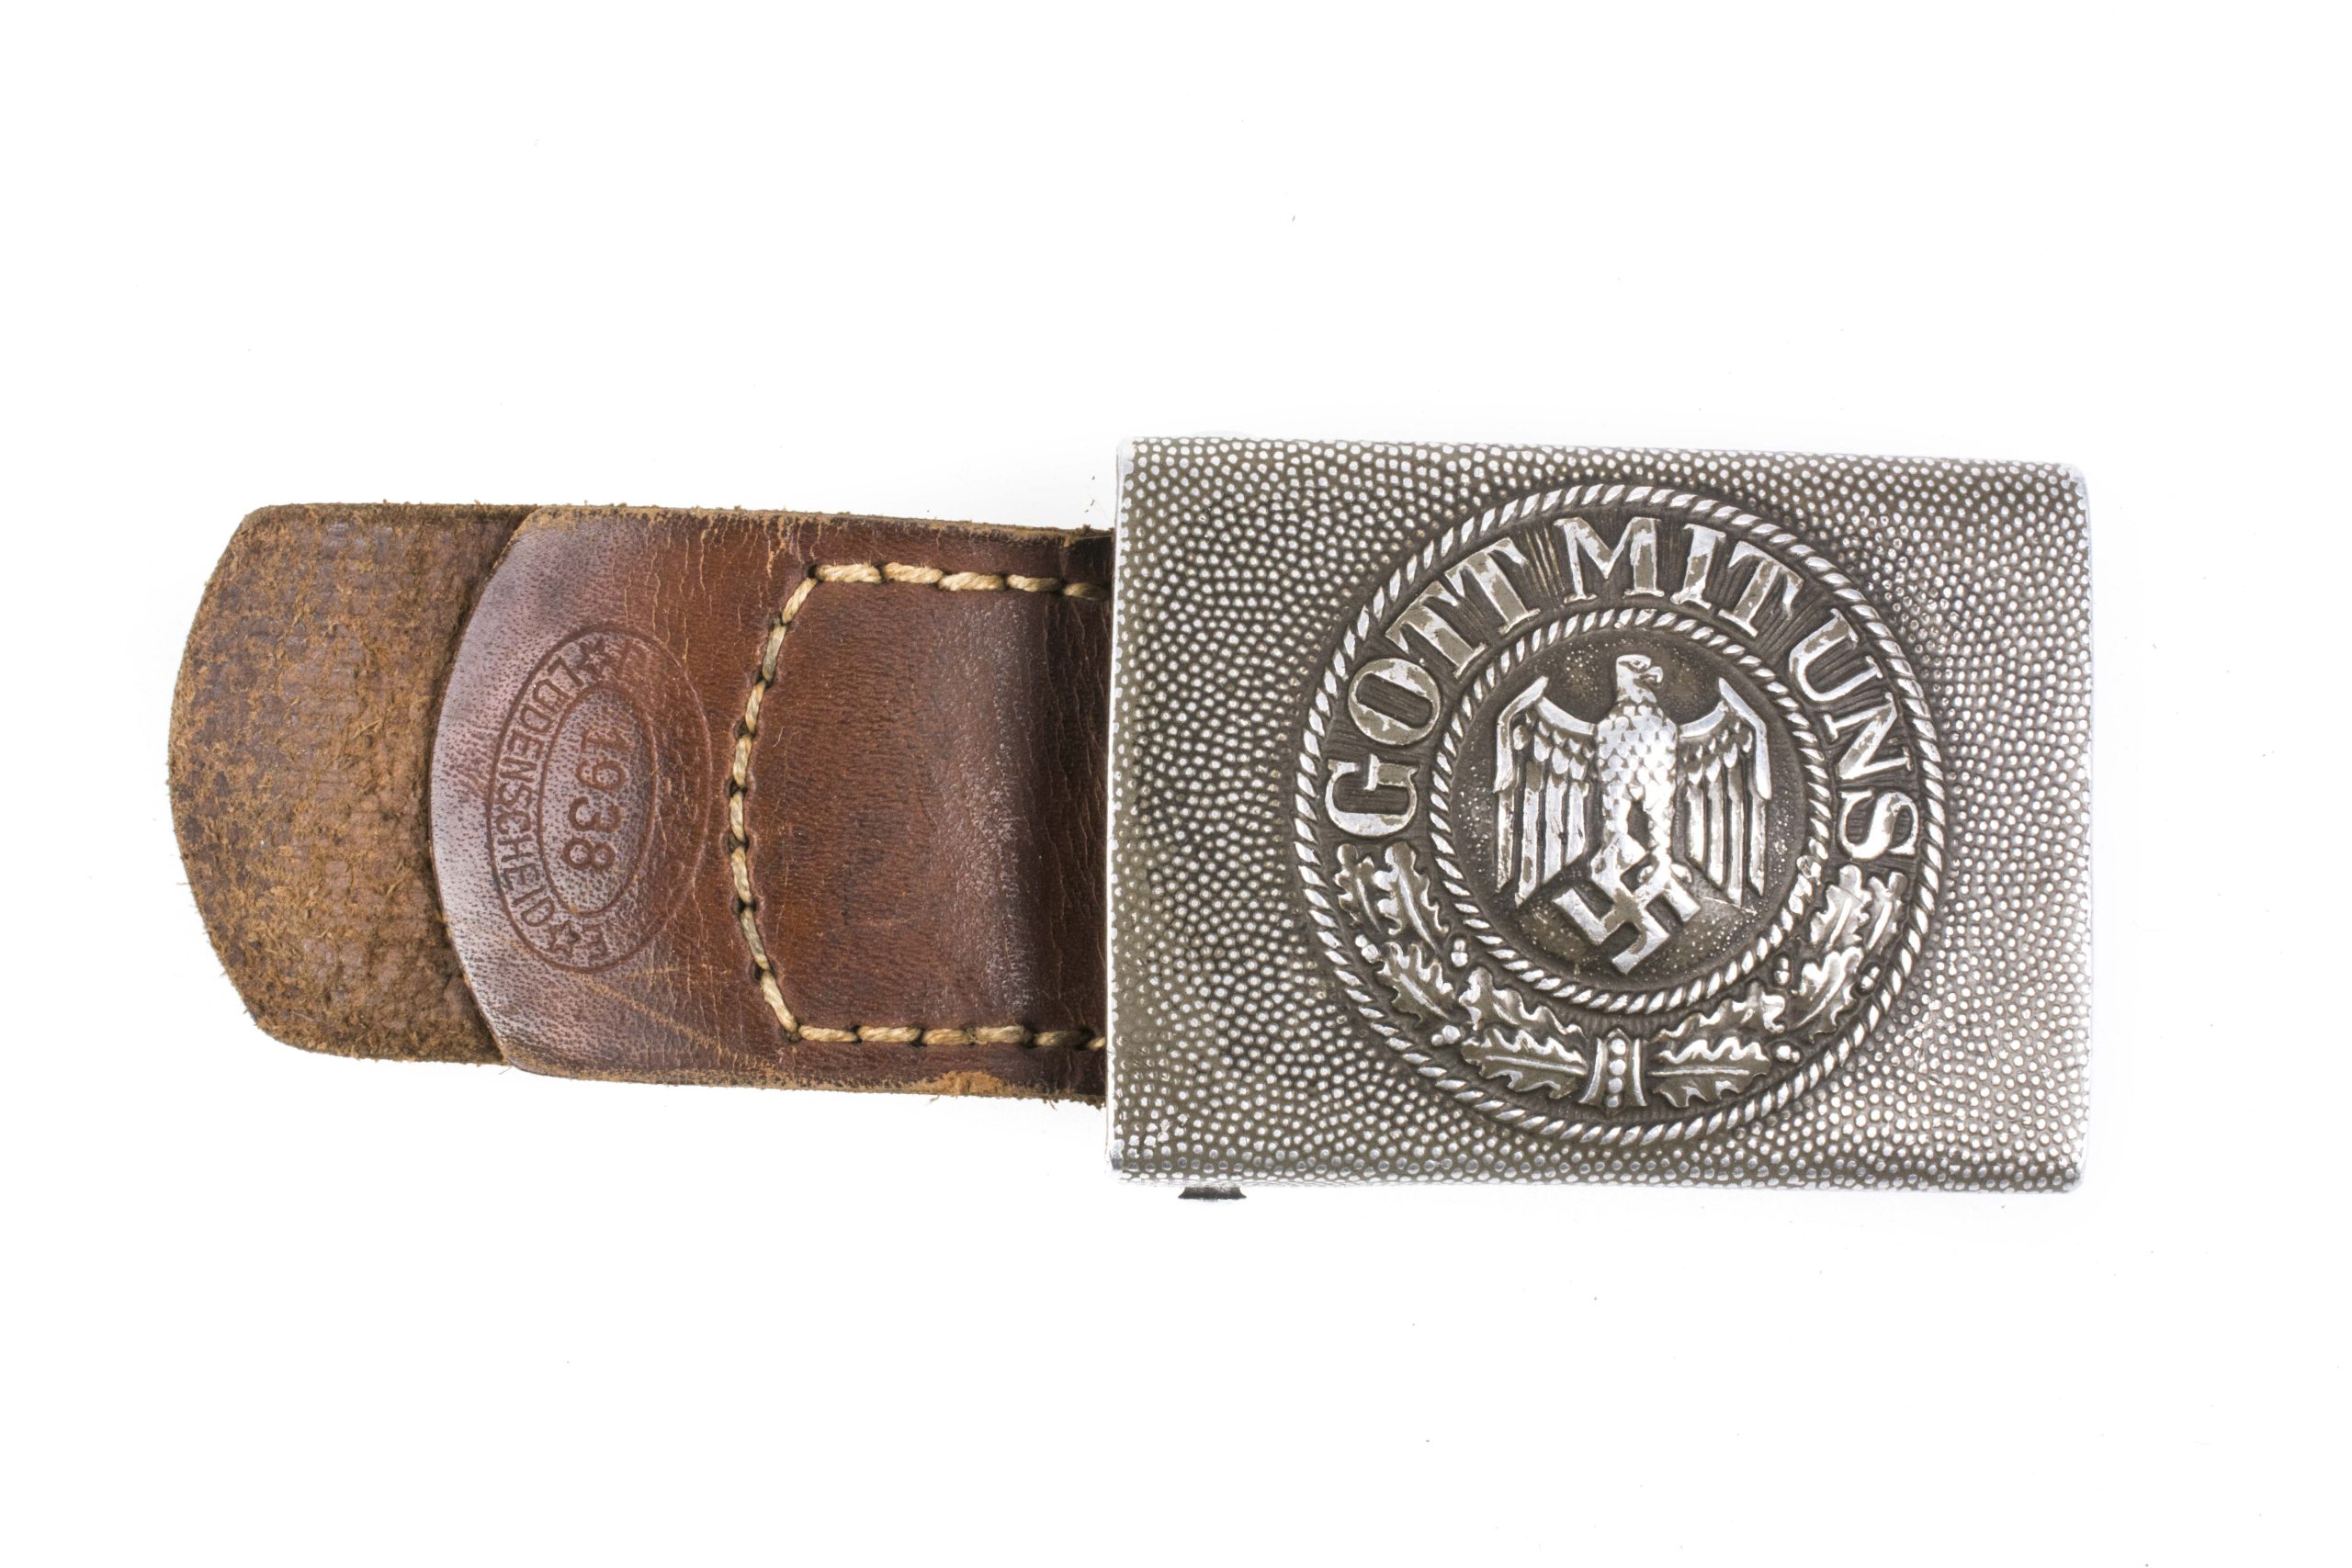 Tabbed Aluminium belt buckle marked Sieper & Söhne, Lüdenscheid 